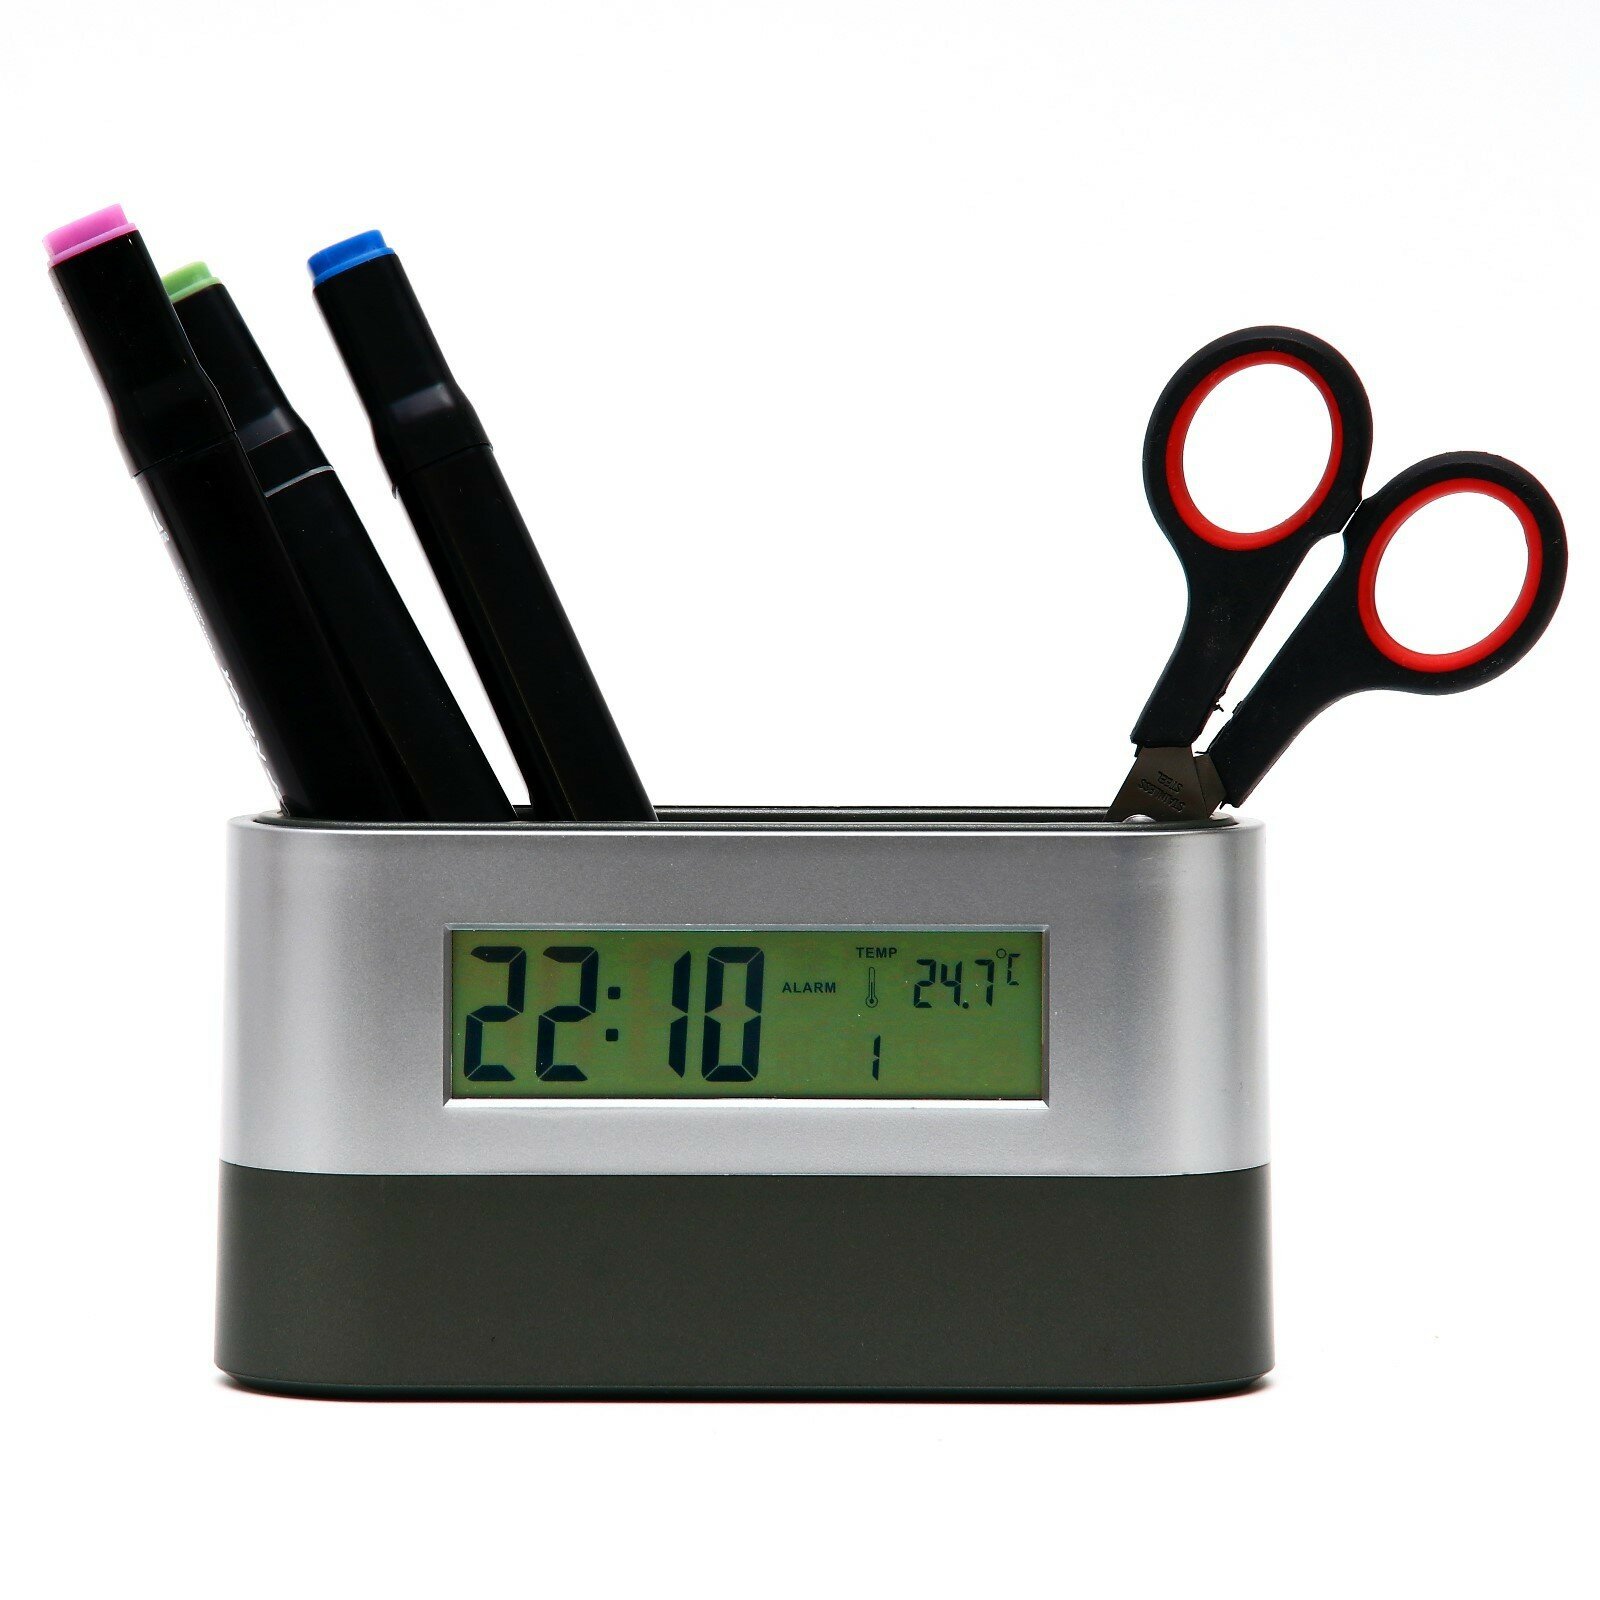 Часы-органайзер настольные электронные: будильник, термометр, календарь, 15.1 х 4.7 см (1шт.)